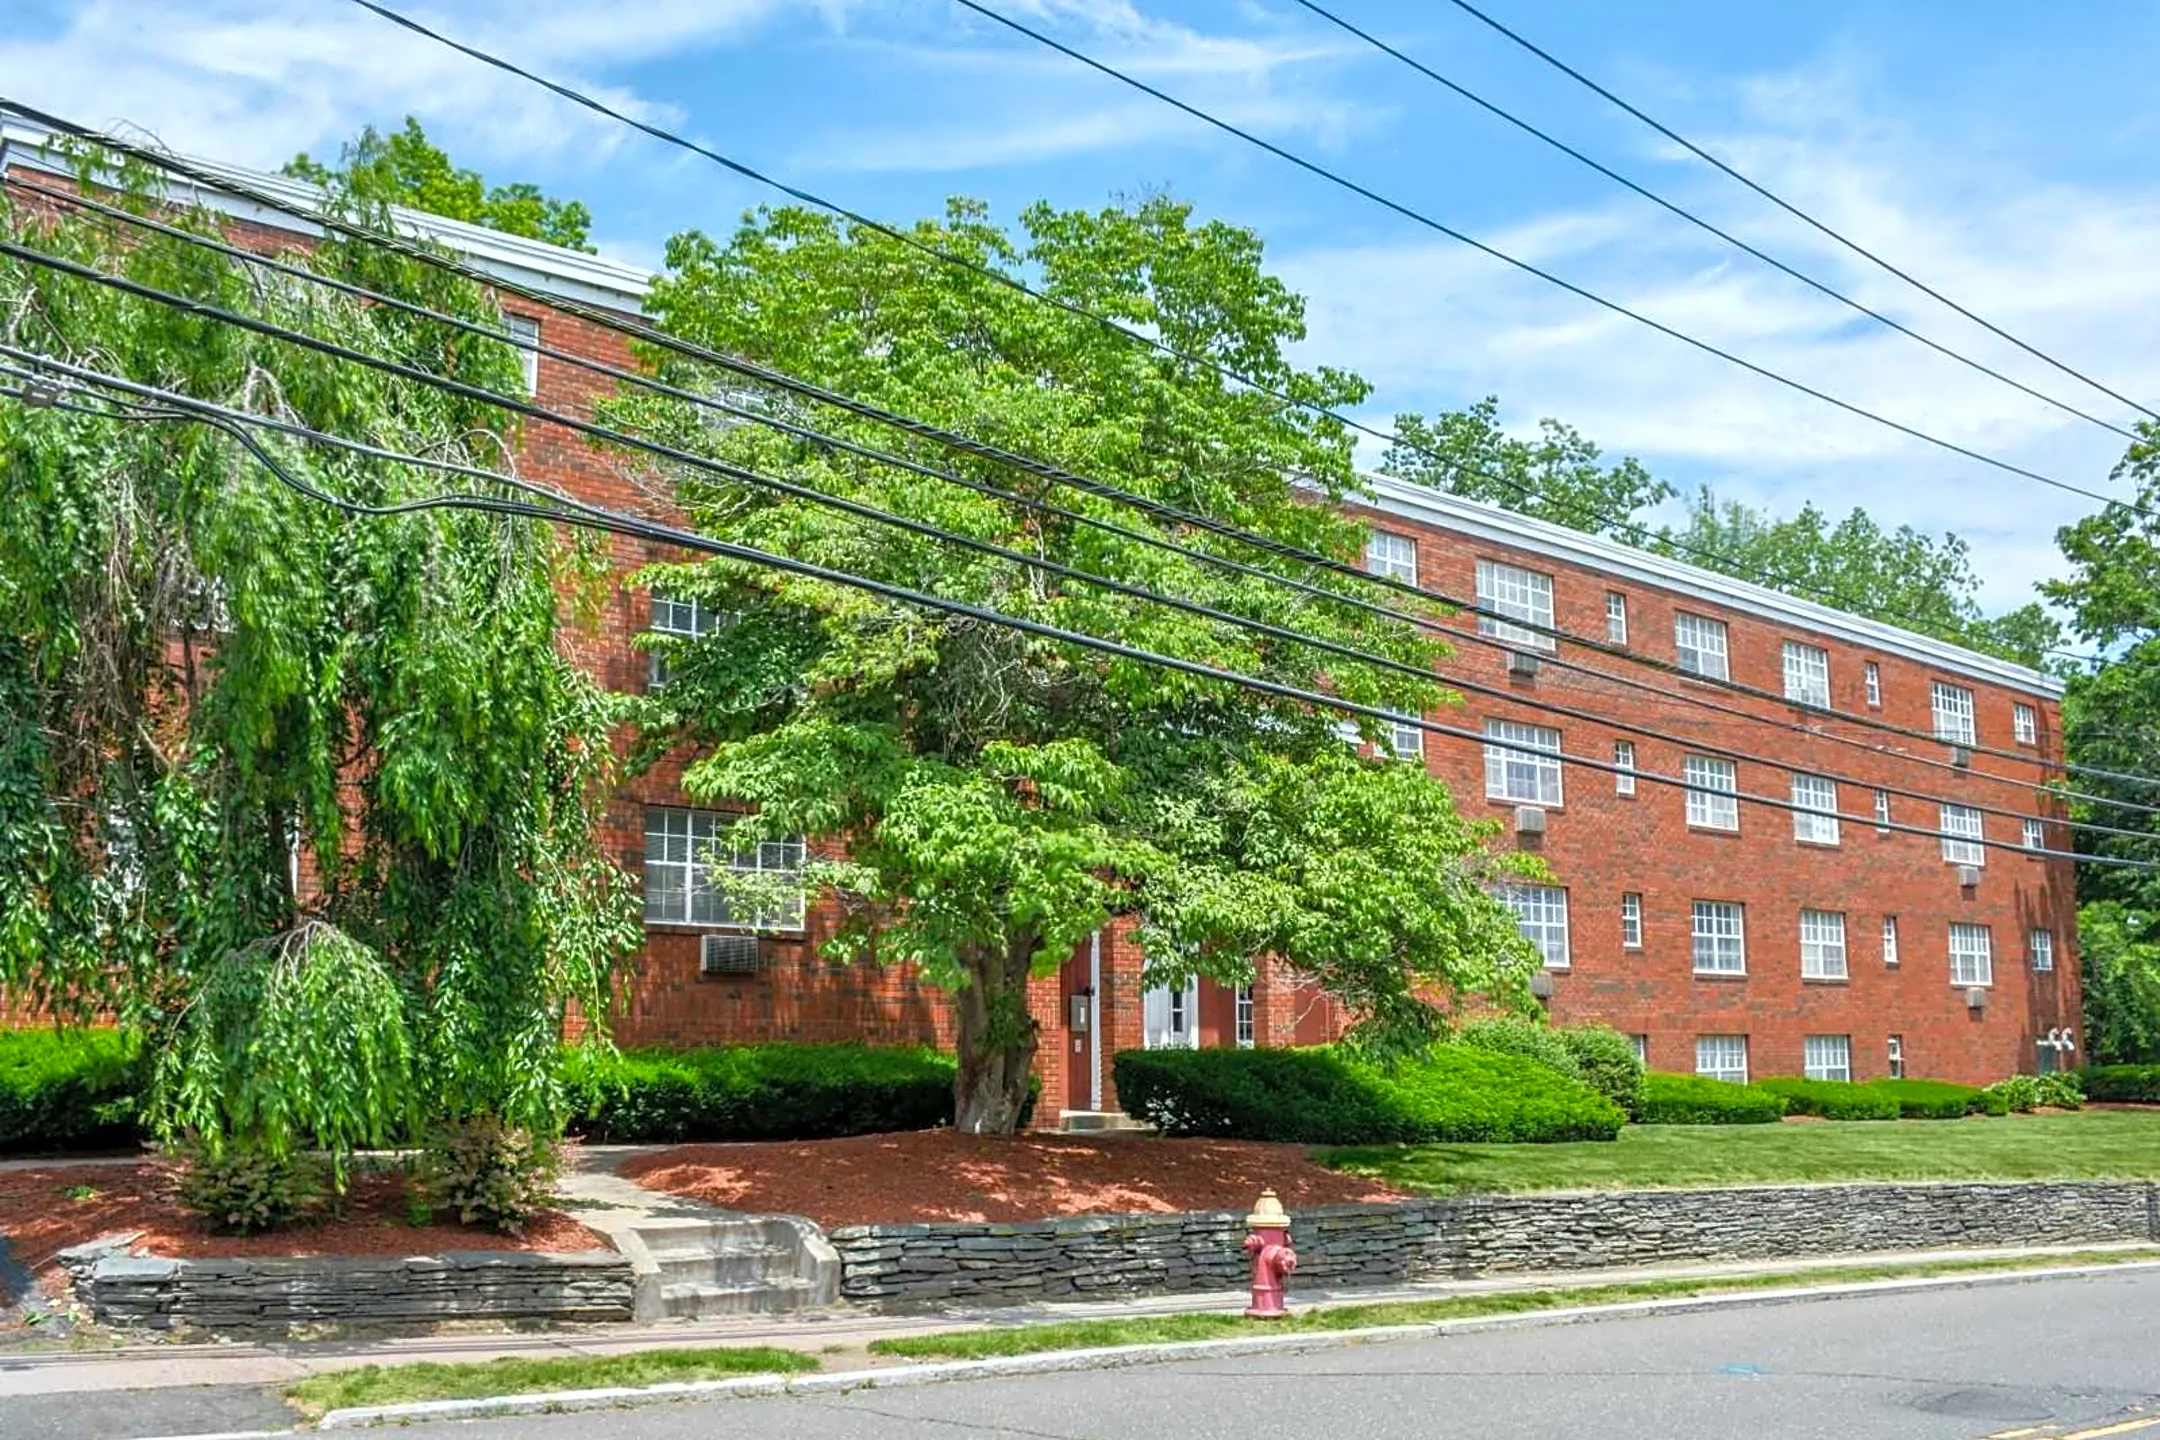 Building - Caya Avenue Apartments - West Hartford, CT